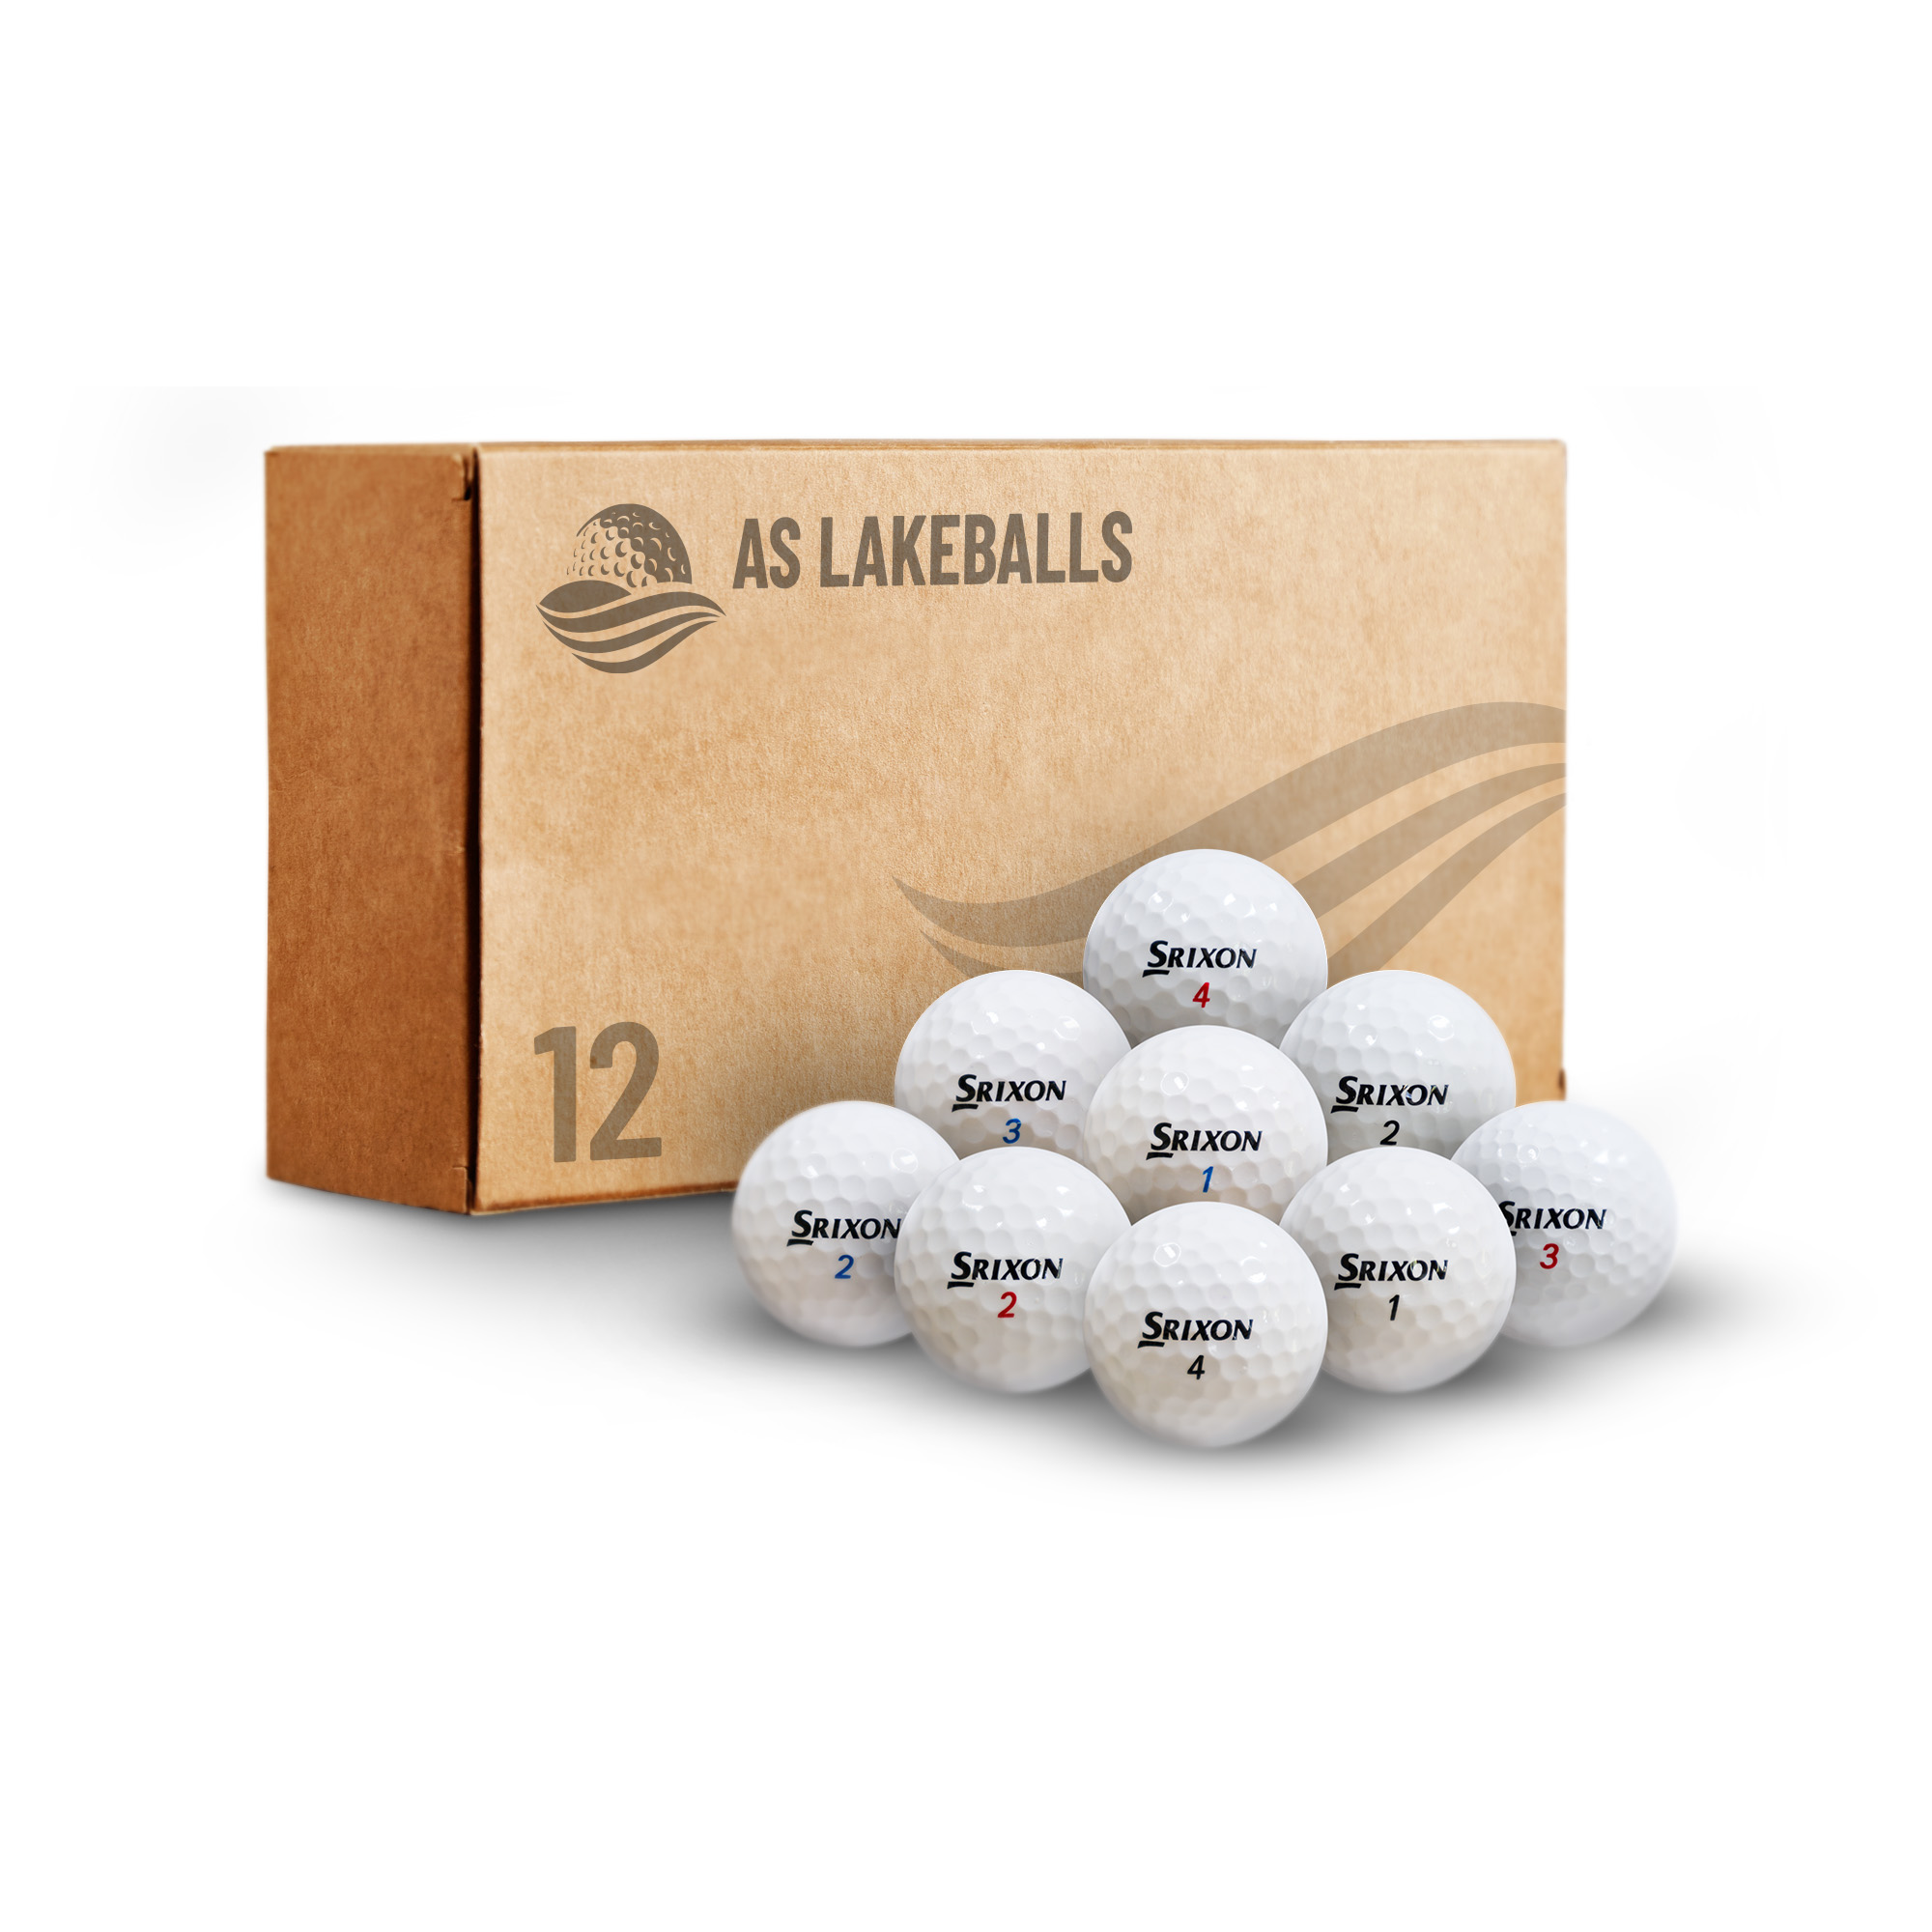 12 Stück Srixon Premium Mix AA Lakeballs bei AS Lakeballs günstig kaufen